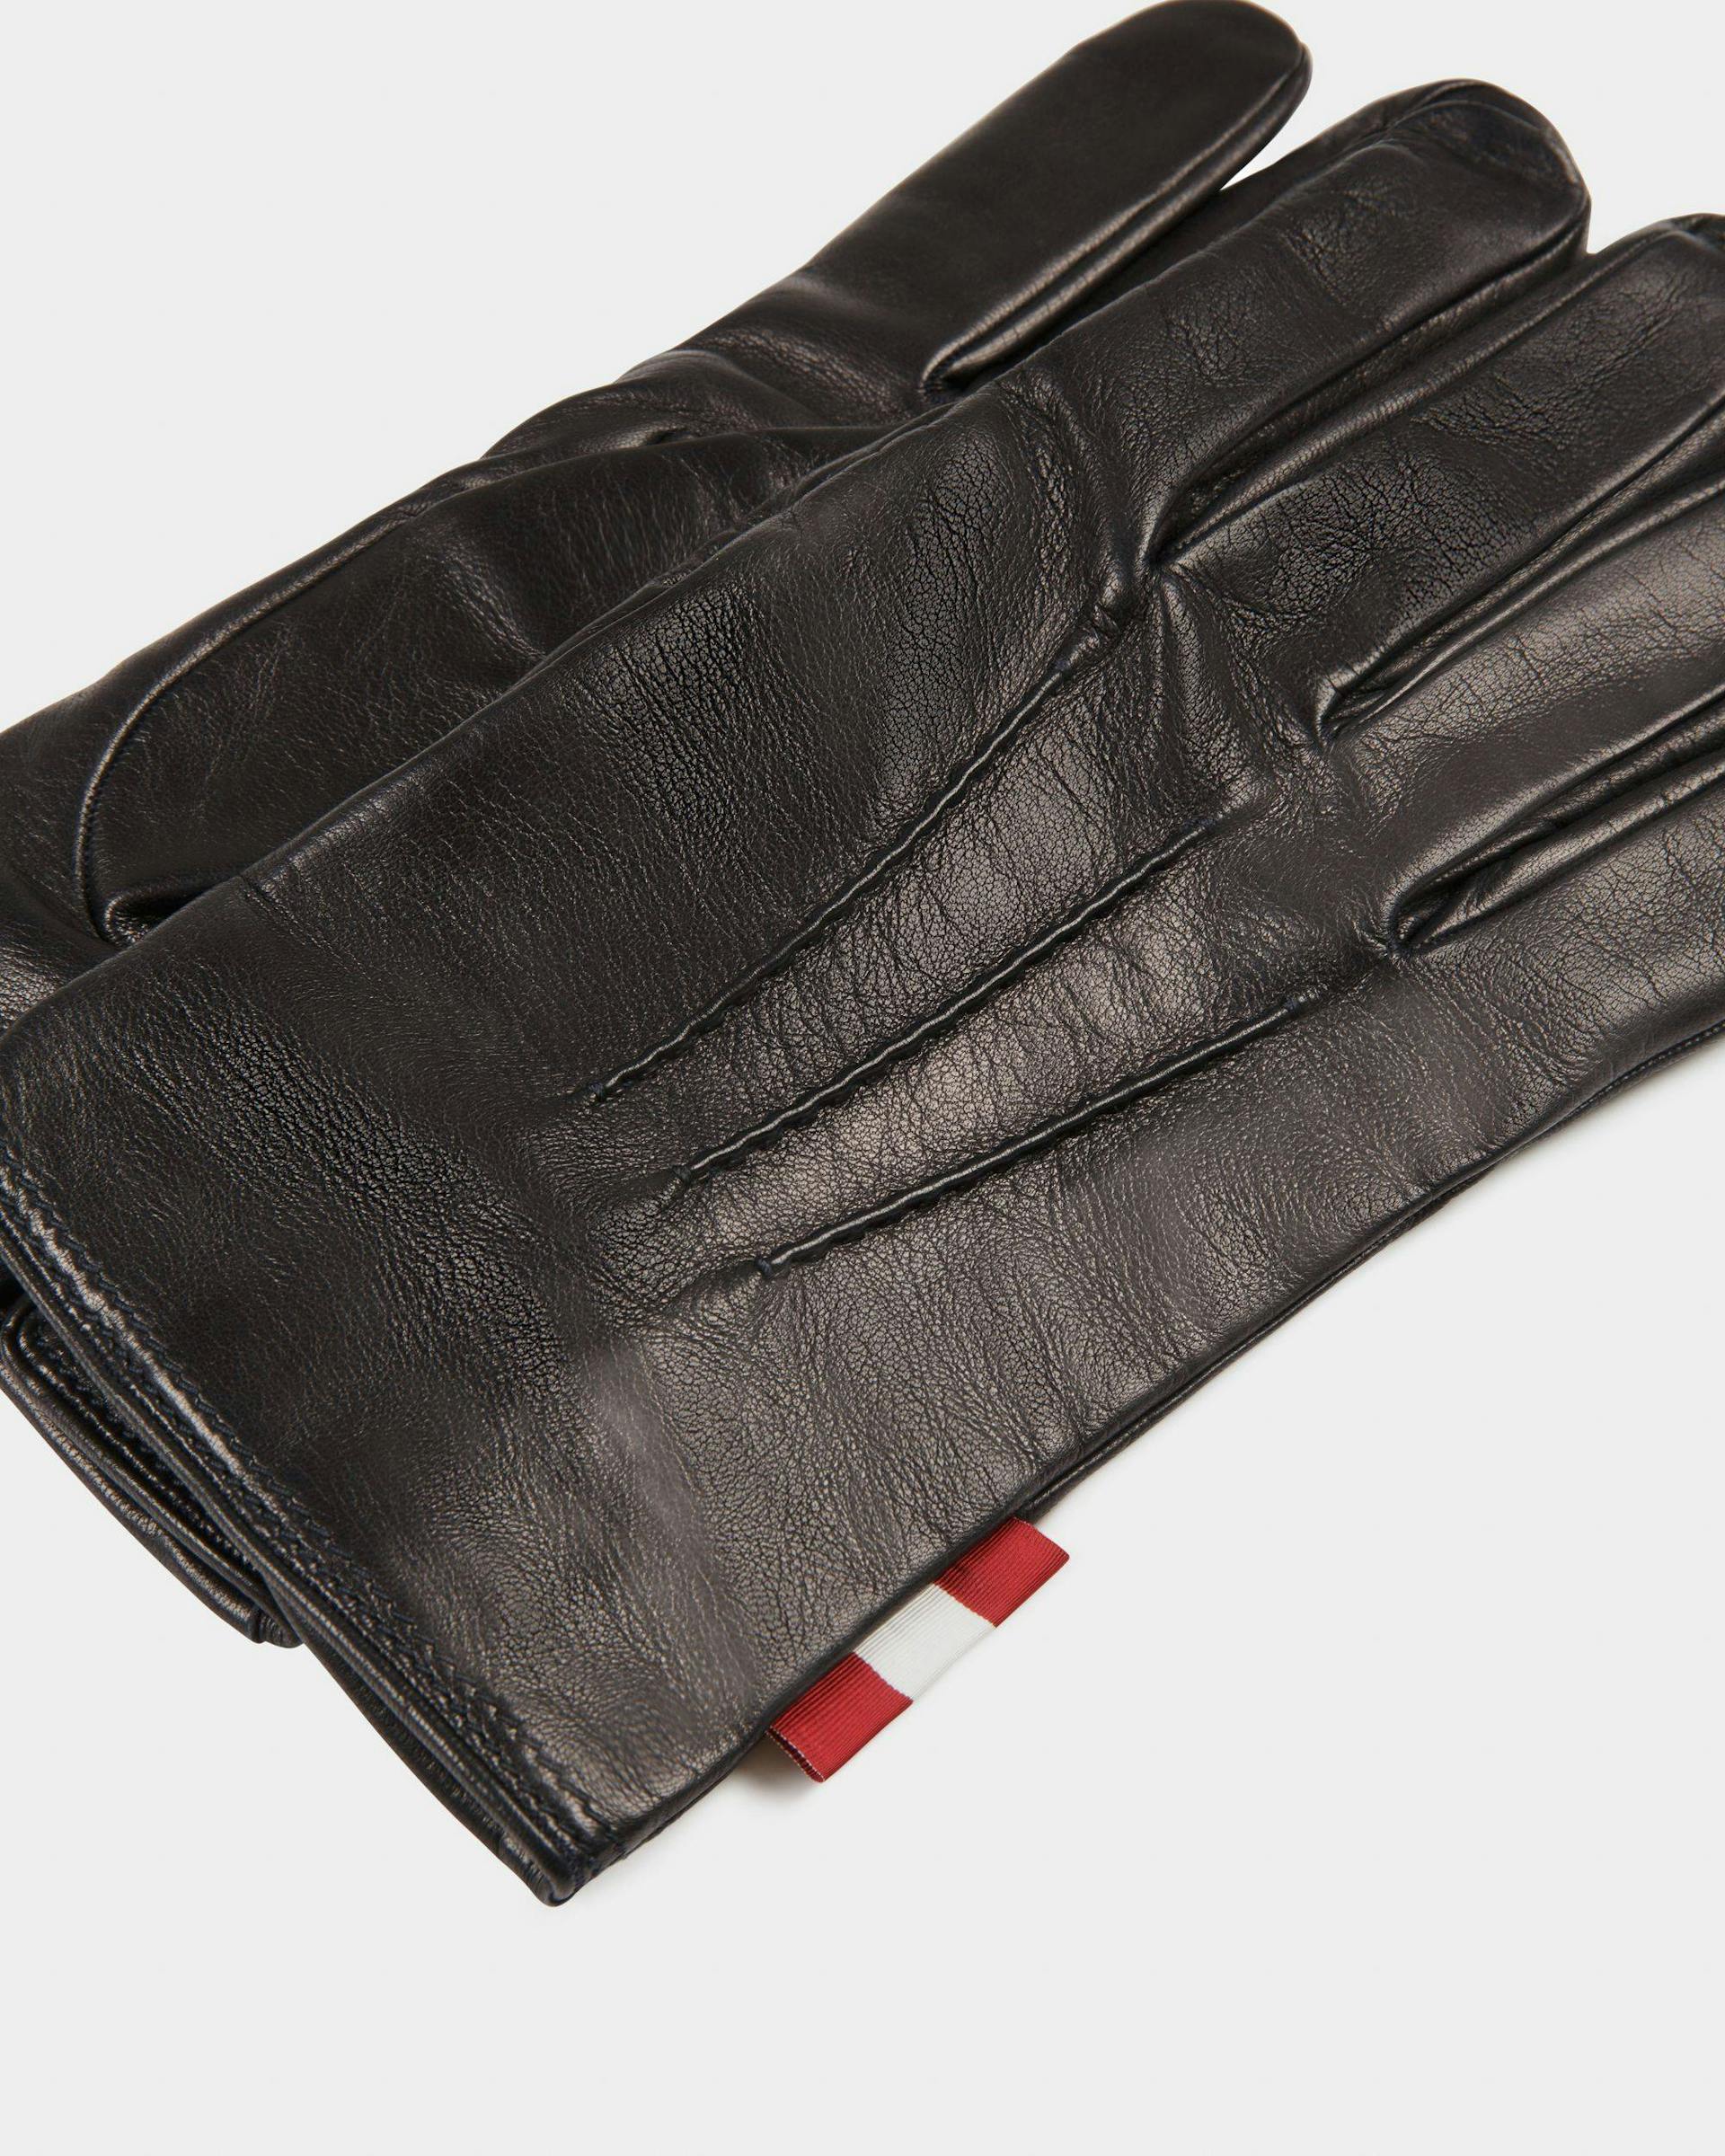 Leather Gloves In Navy - Men's - Bally - 02